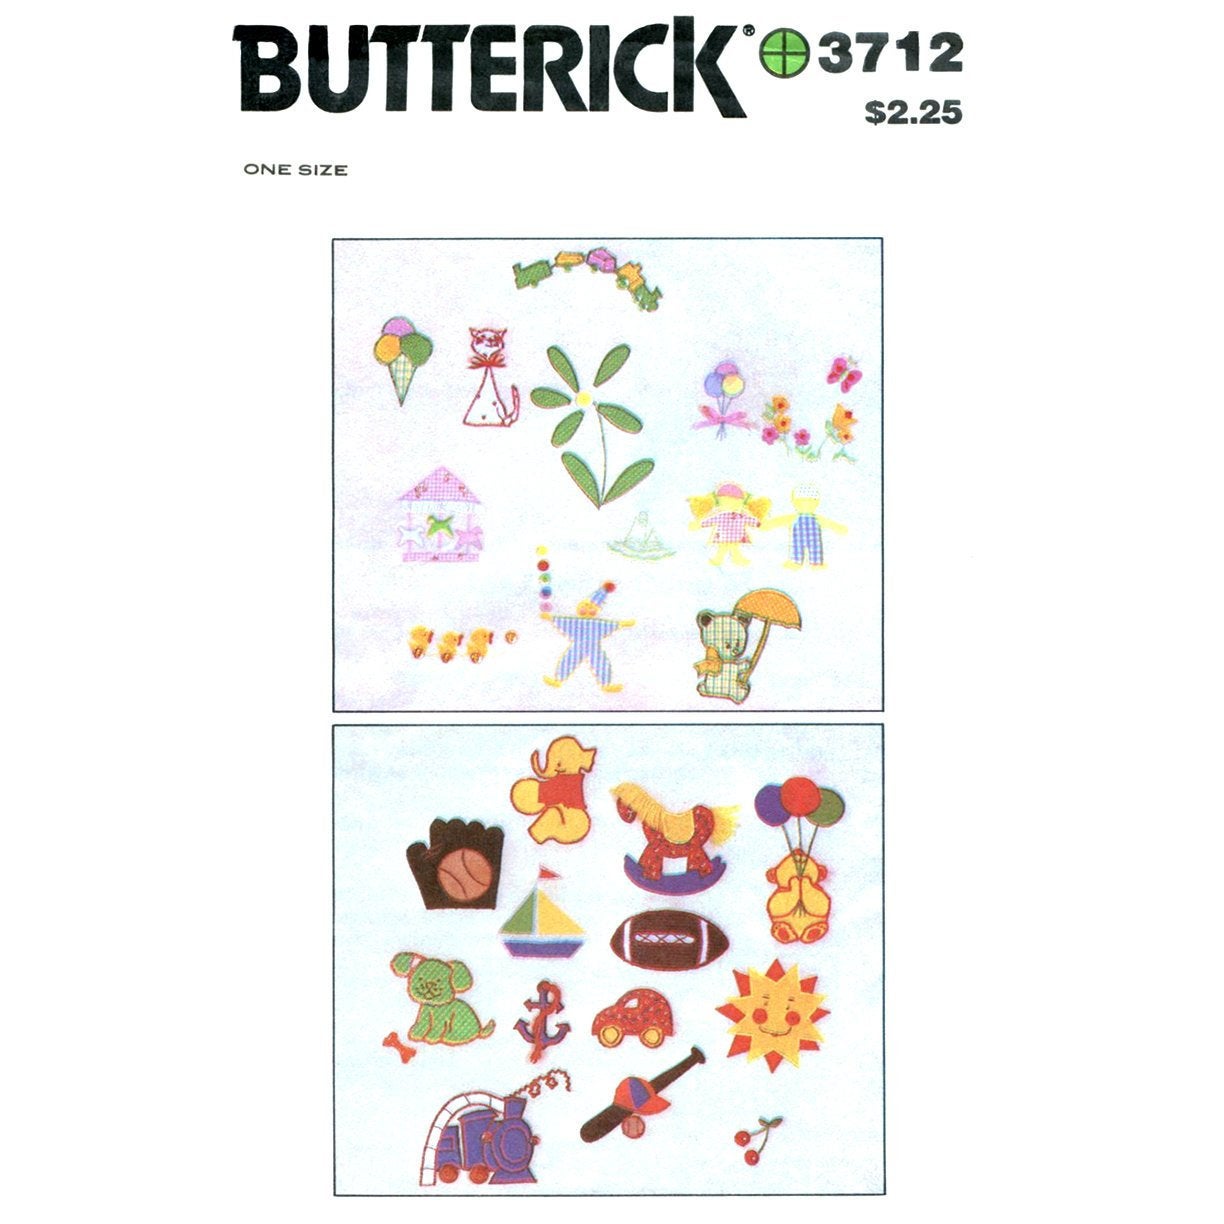 Butterick 3712 transfer pattern